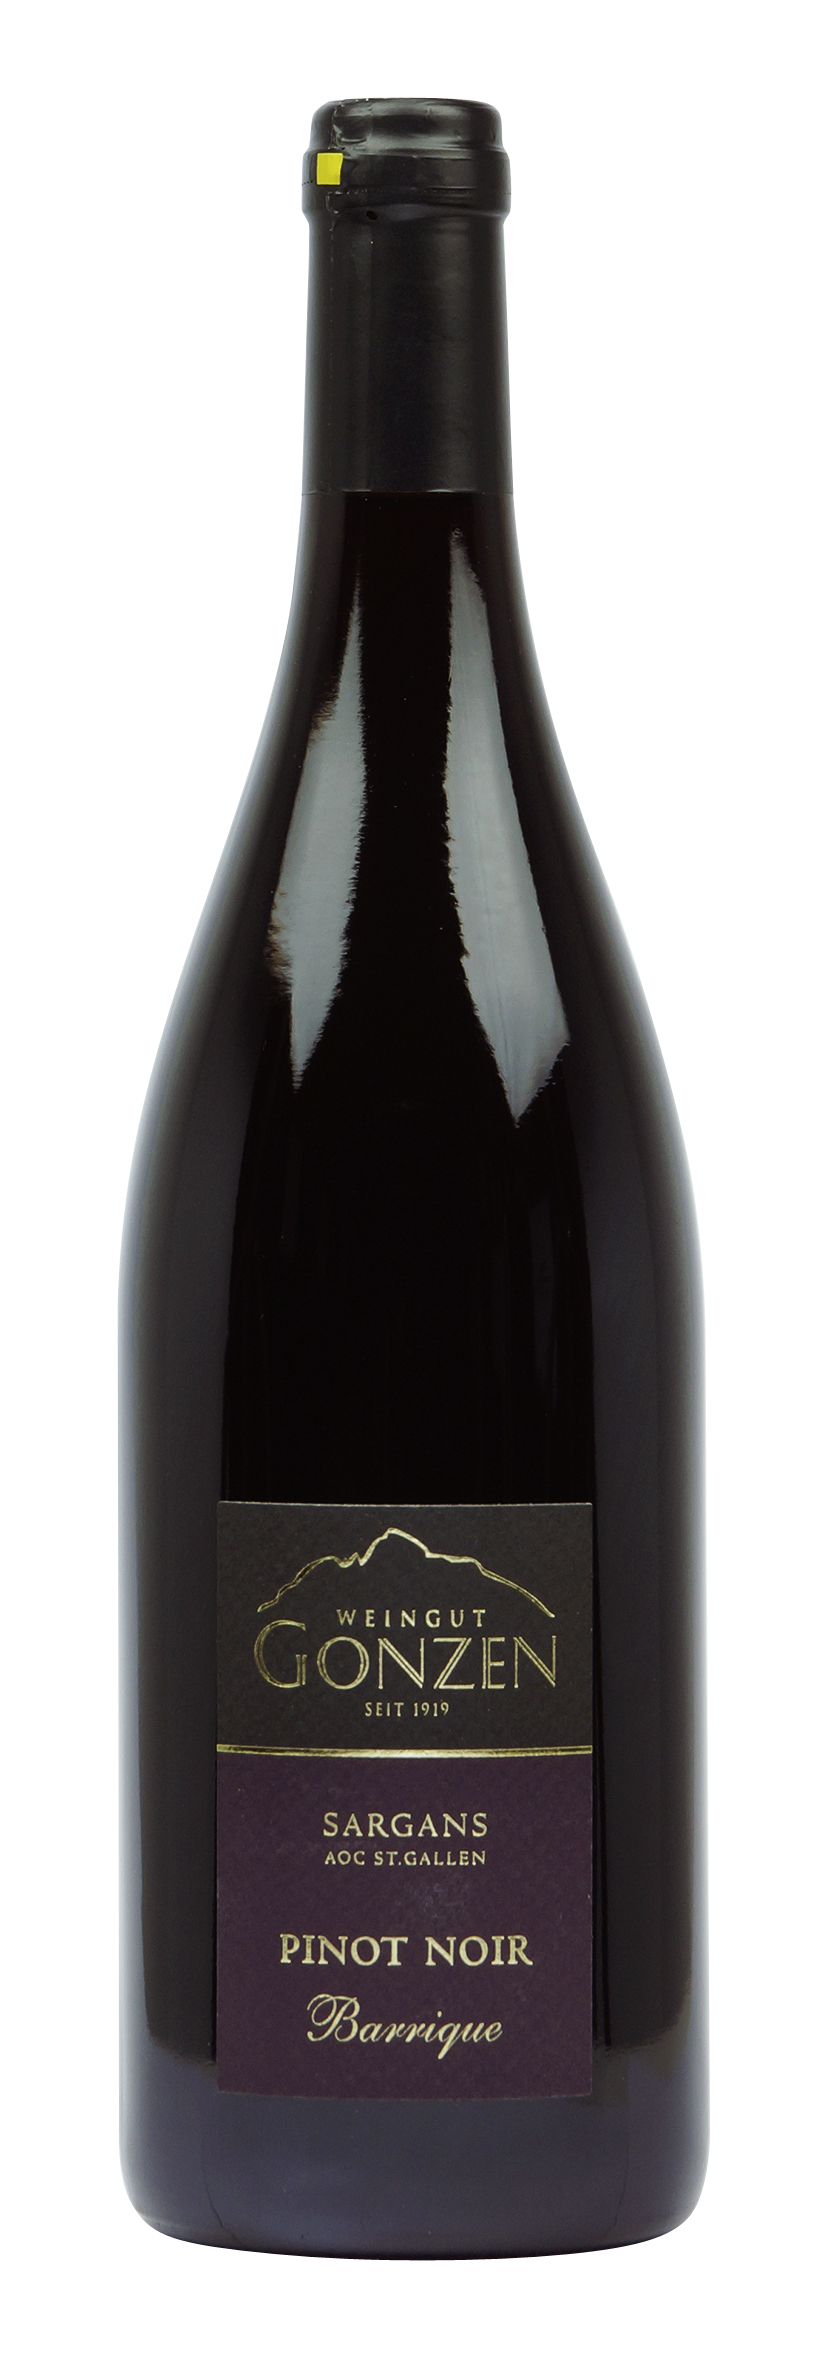 St. Gallen AOC Sargans Pinot Noir Barrique 2015